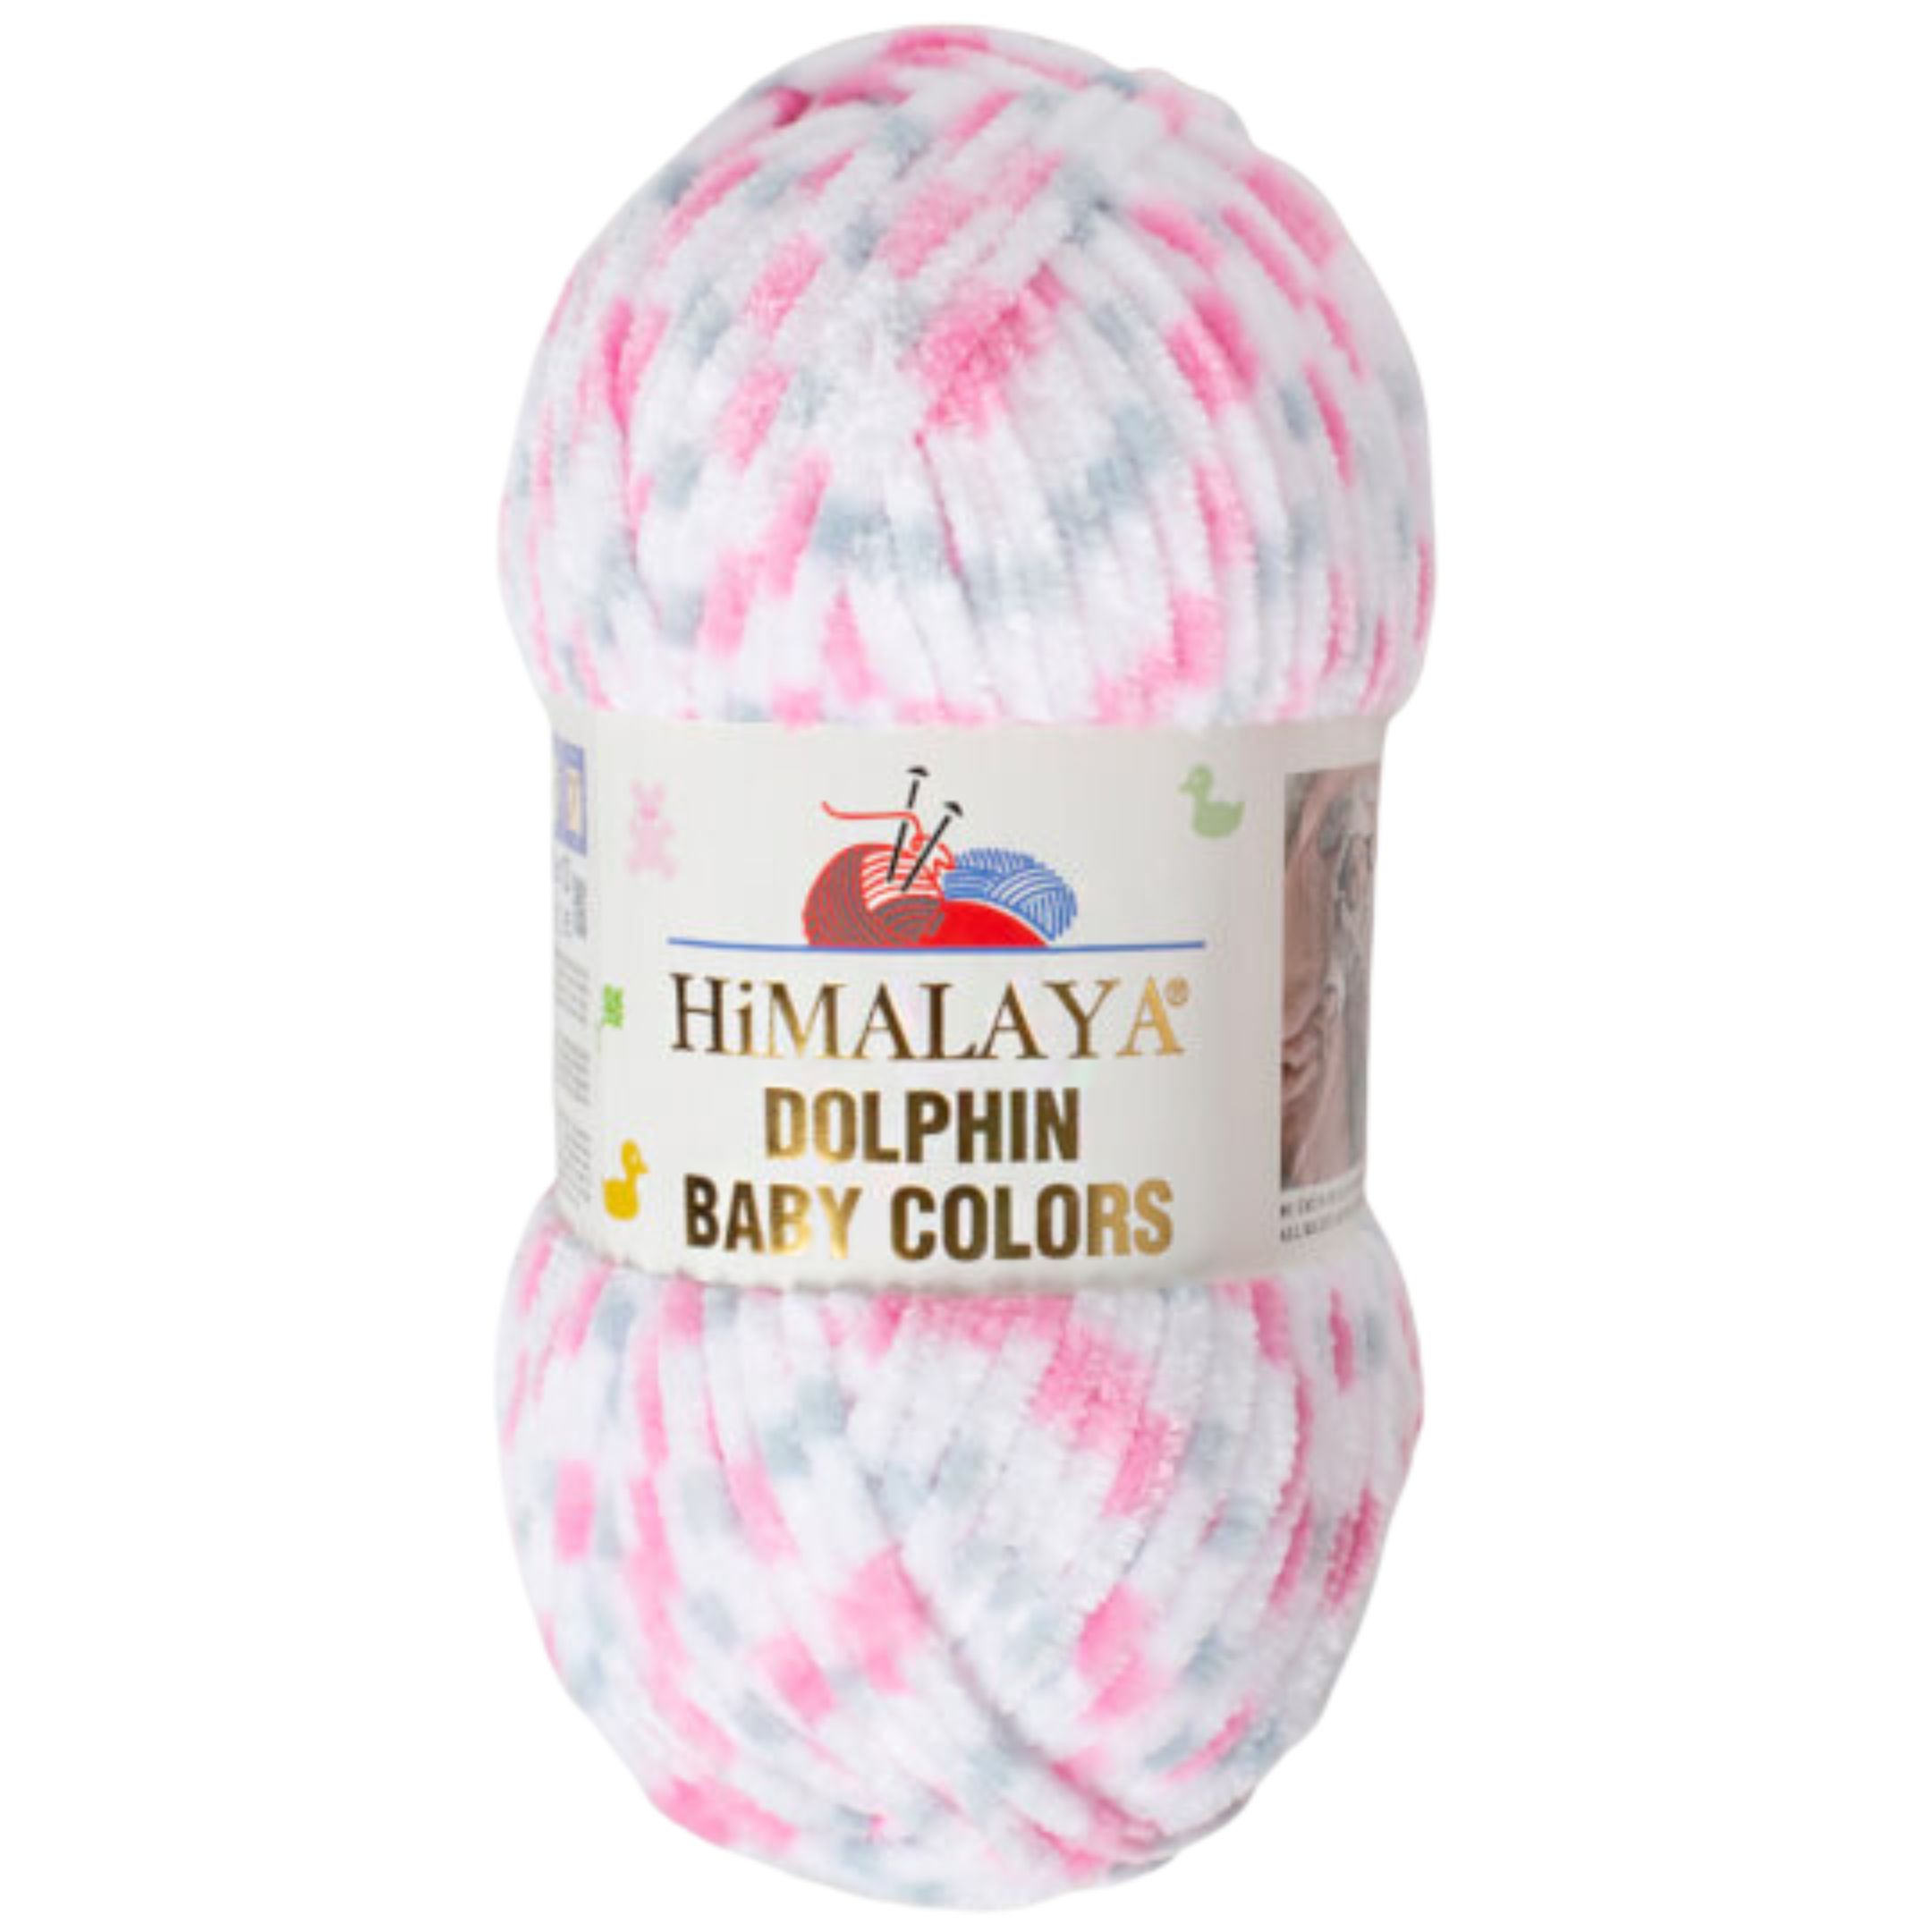 Himalaya Dolphin Baby 100% polyester, 5 Skein Value Pack, 500g, code HDB  Himalaya